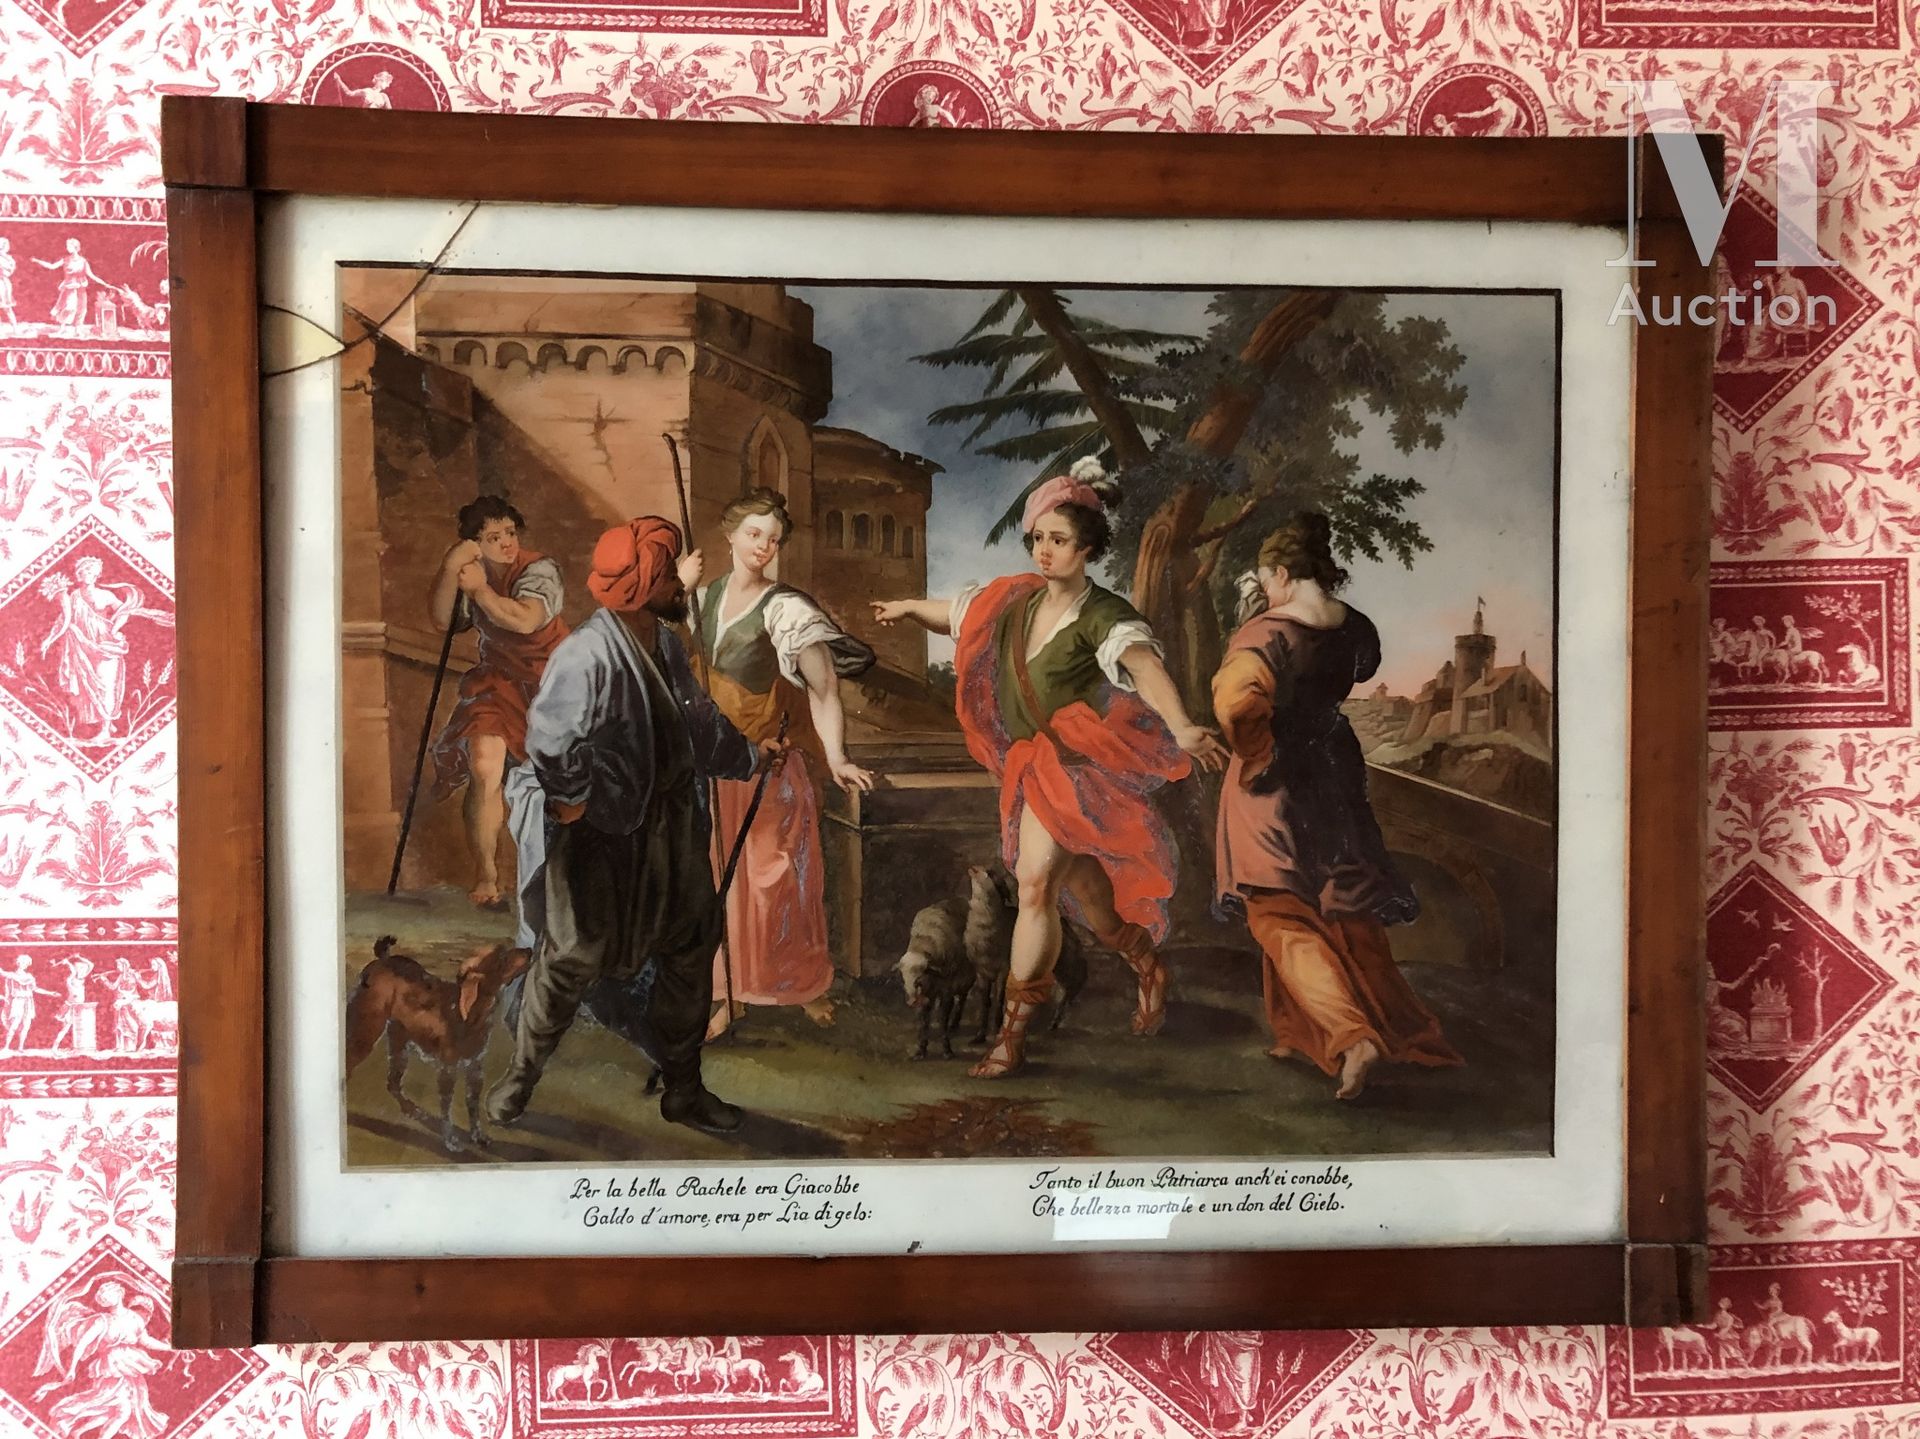 FIXE SOUS VERRE Rachel y Jacobé

Siglo XVIII 

Accidentes 

46 x 60 cm